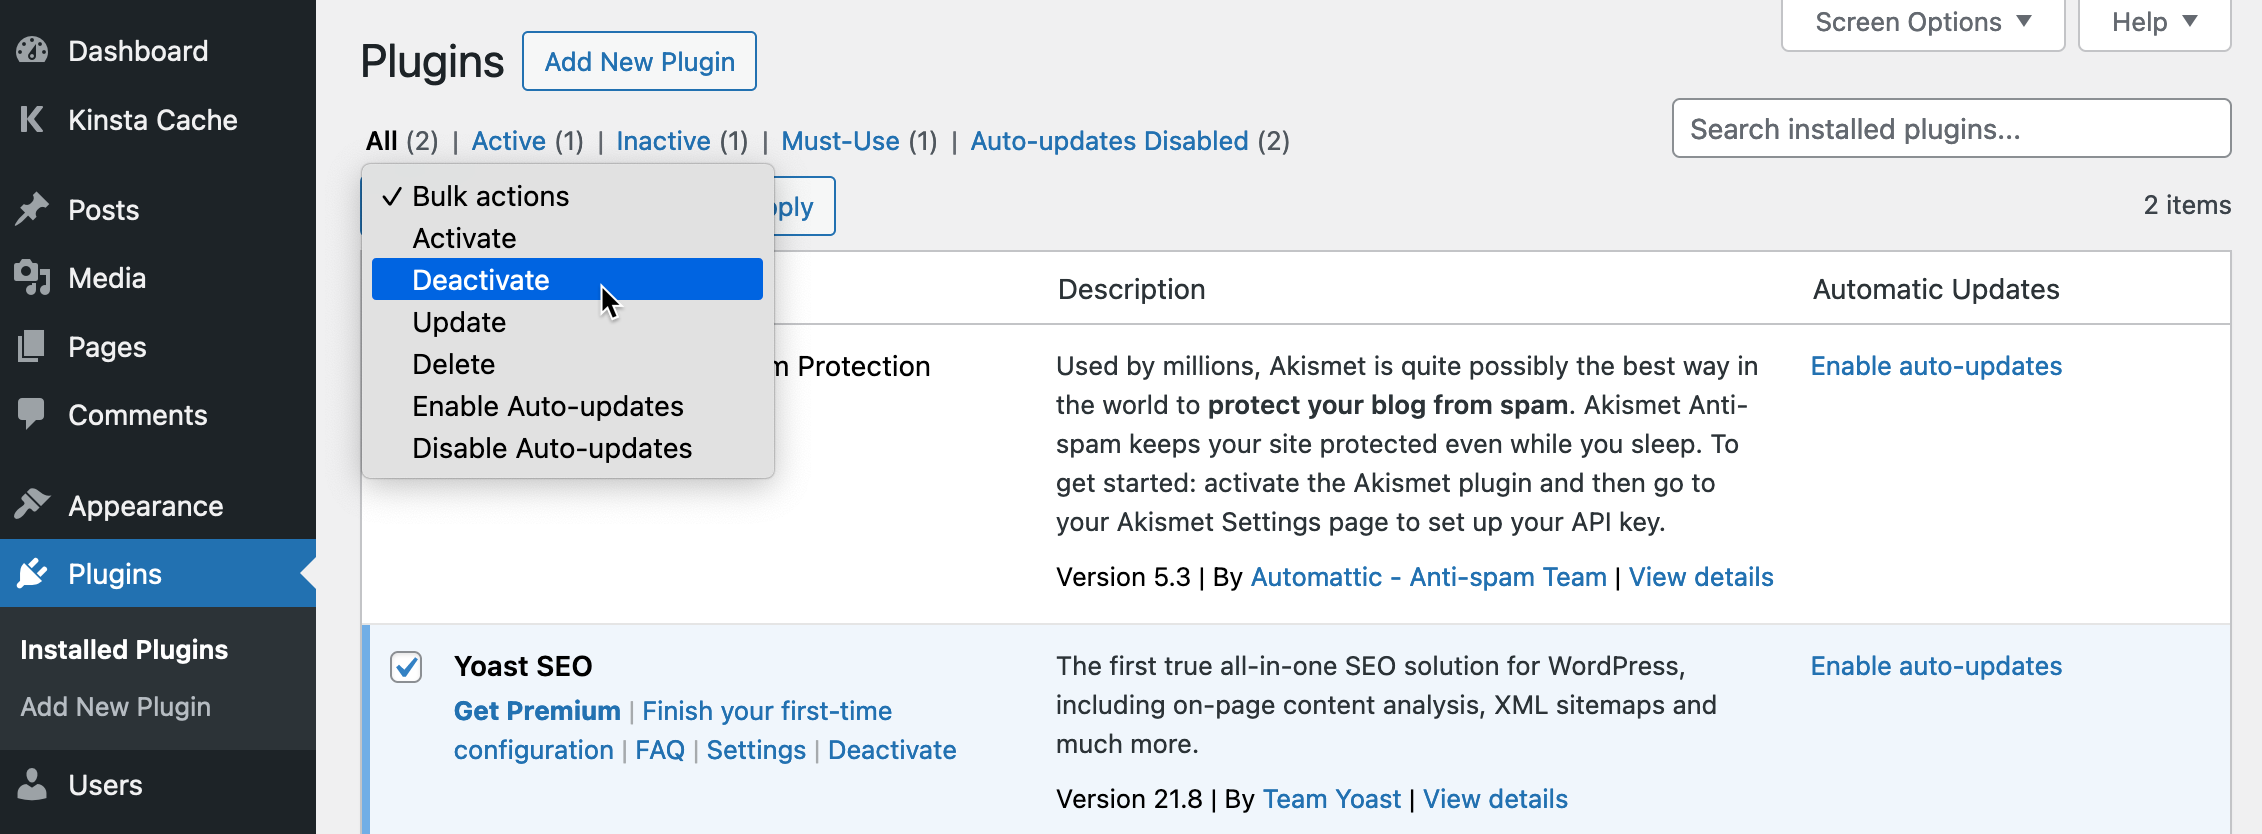 Screenshot of the WordPress plugins page and the Bulk Actions drop-down menu,